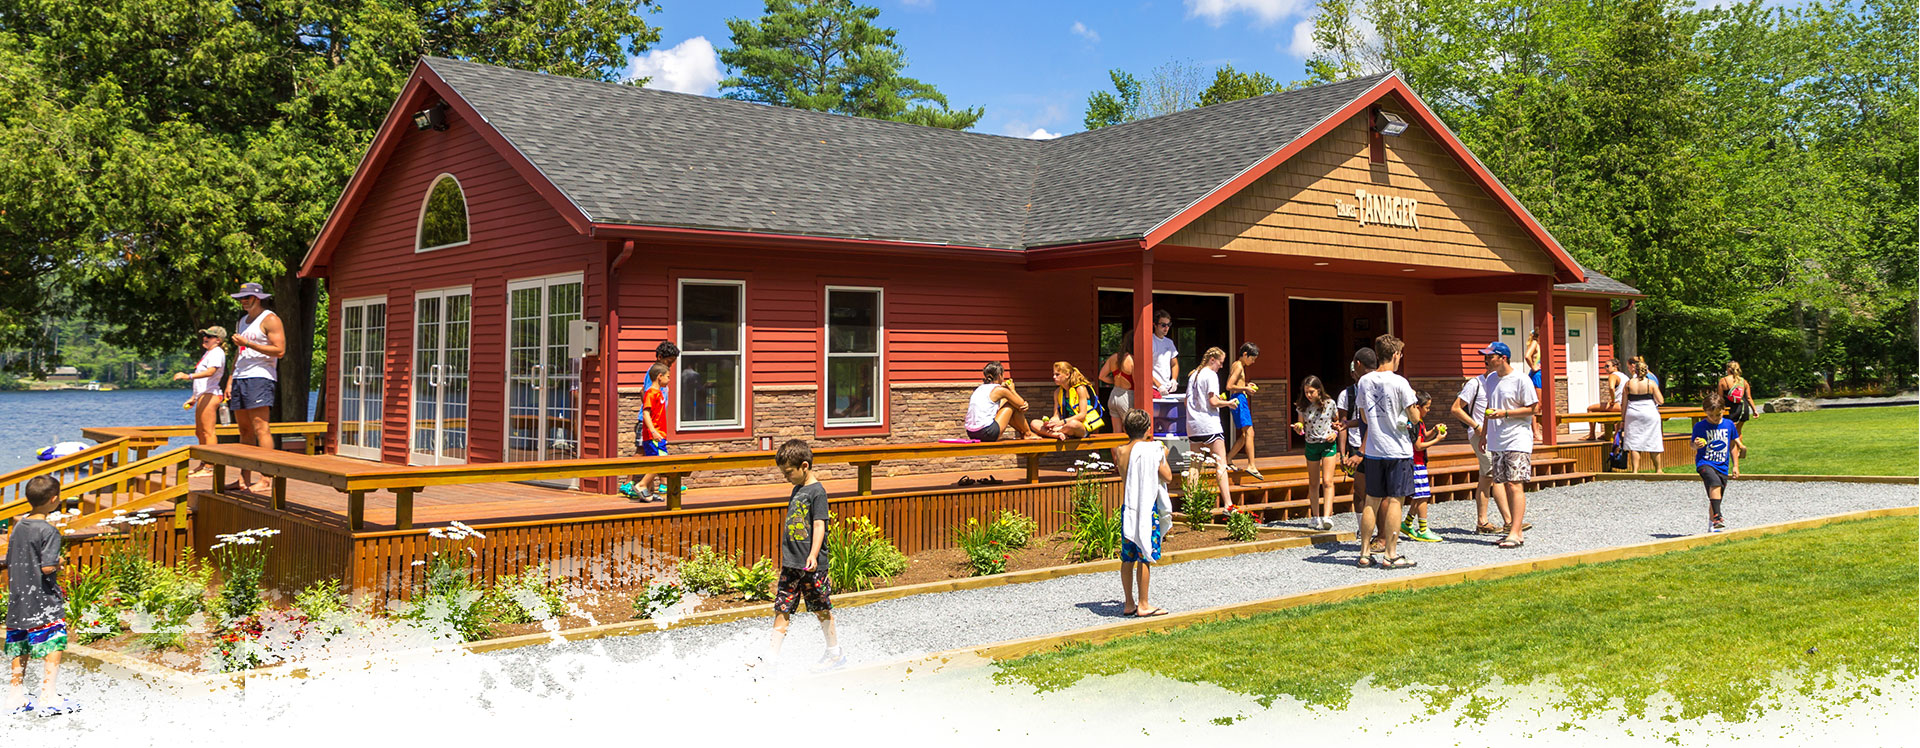 Summer camp facilities at Camp Laurel in Maine